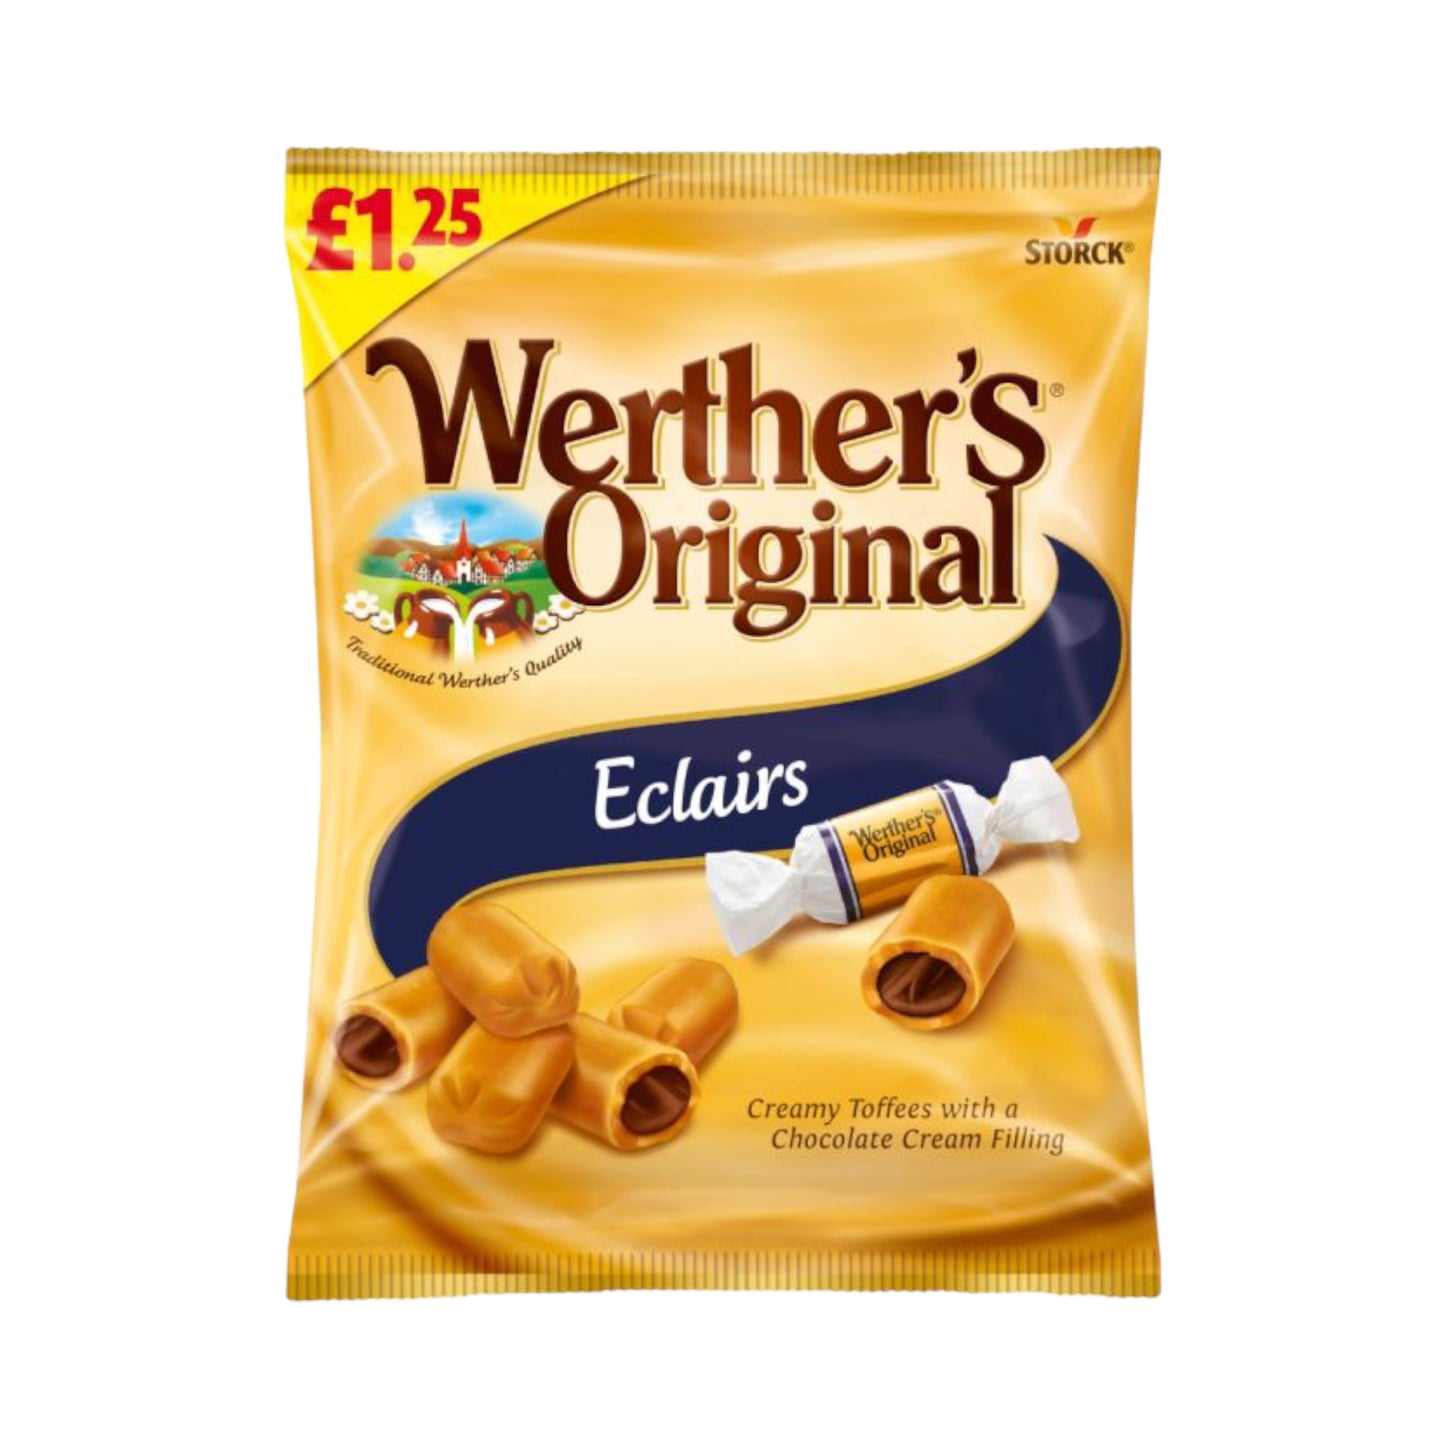 Werther's Original Eclairs - 100g (£1.25 PMP)